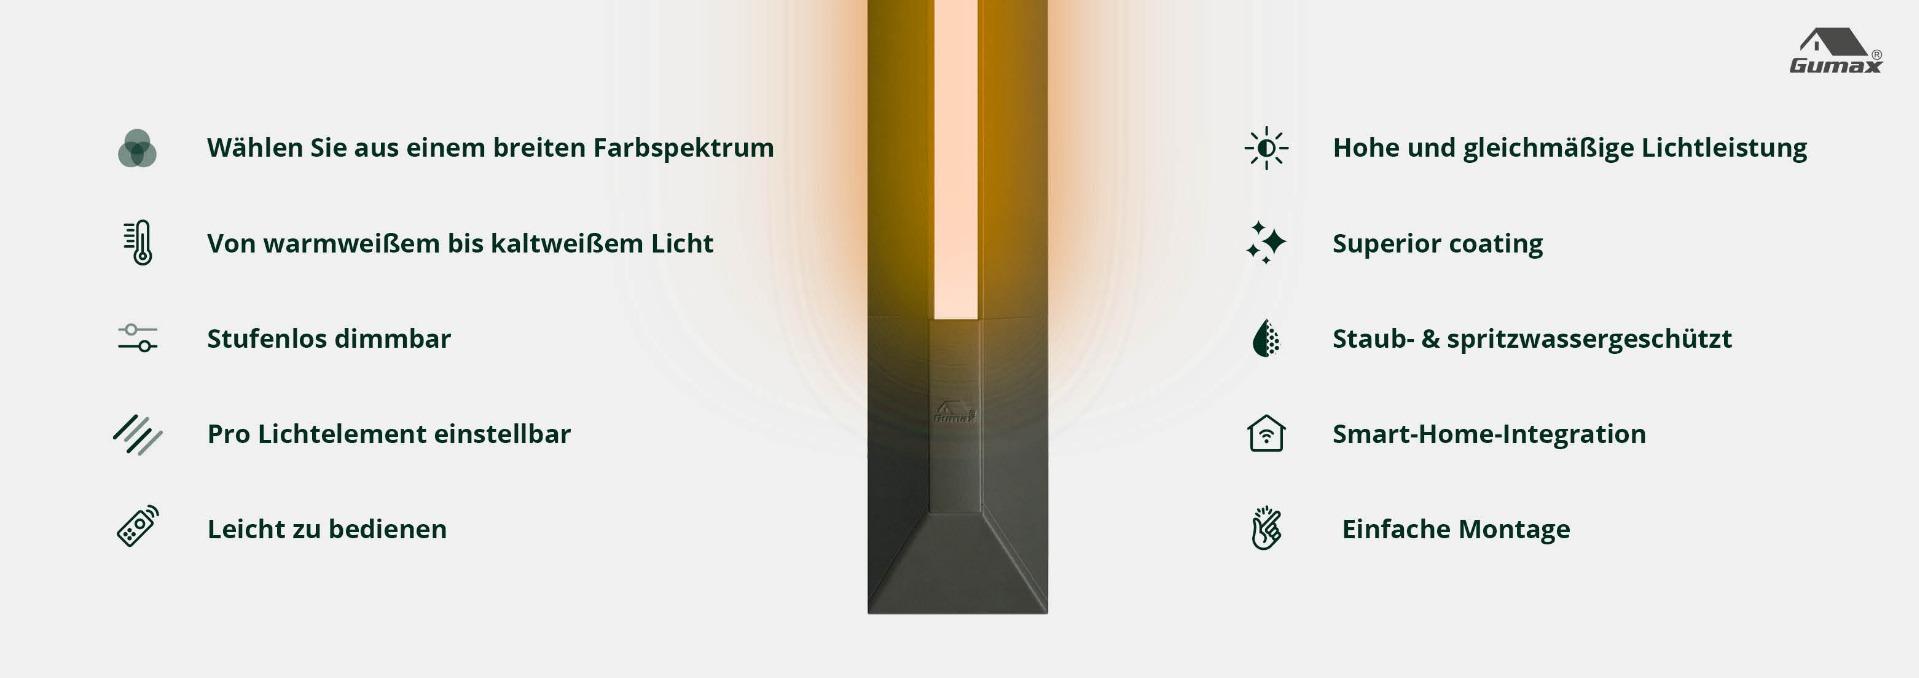 Gumax Lighting System - veranda beleuchtung vorteile